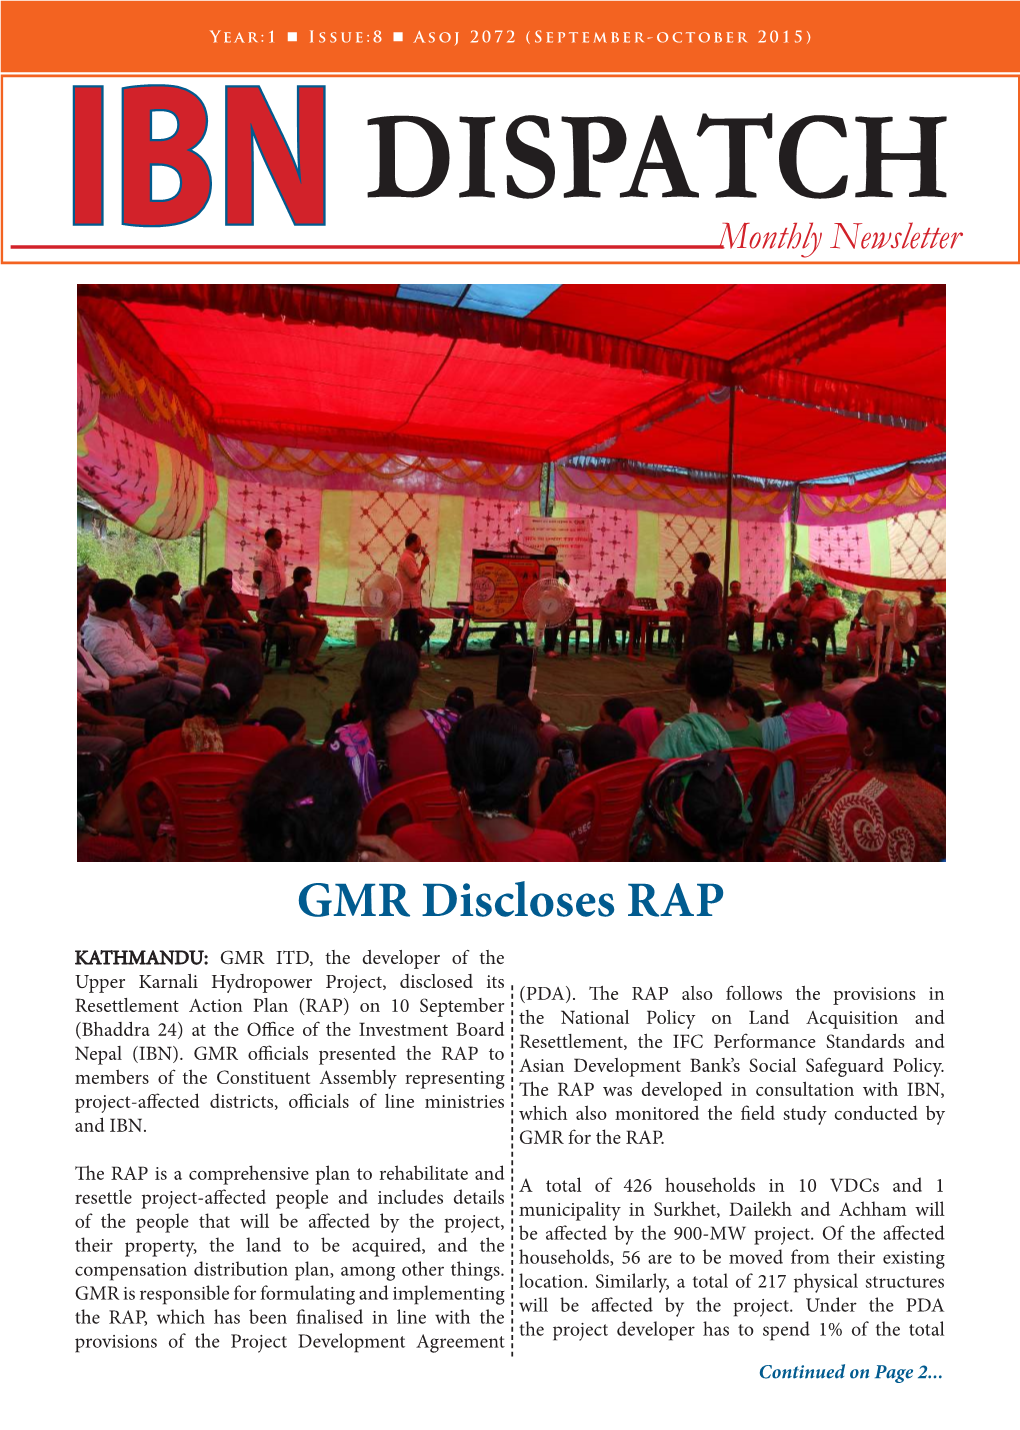 GMR Discloses RAP